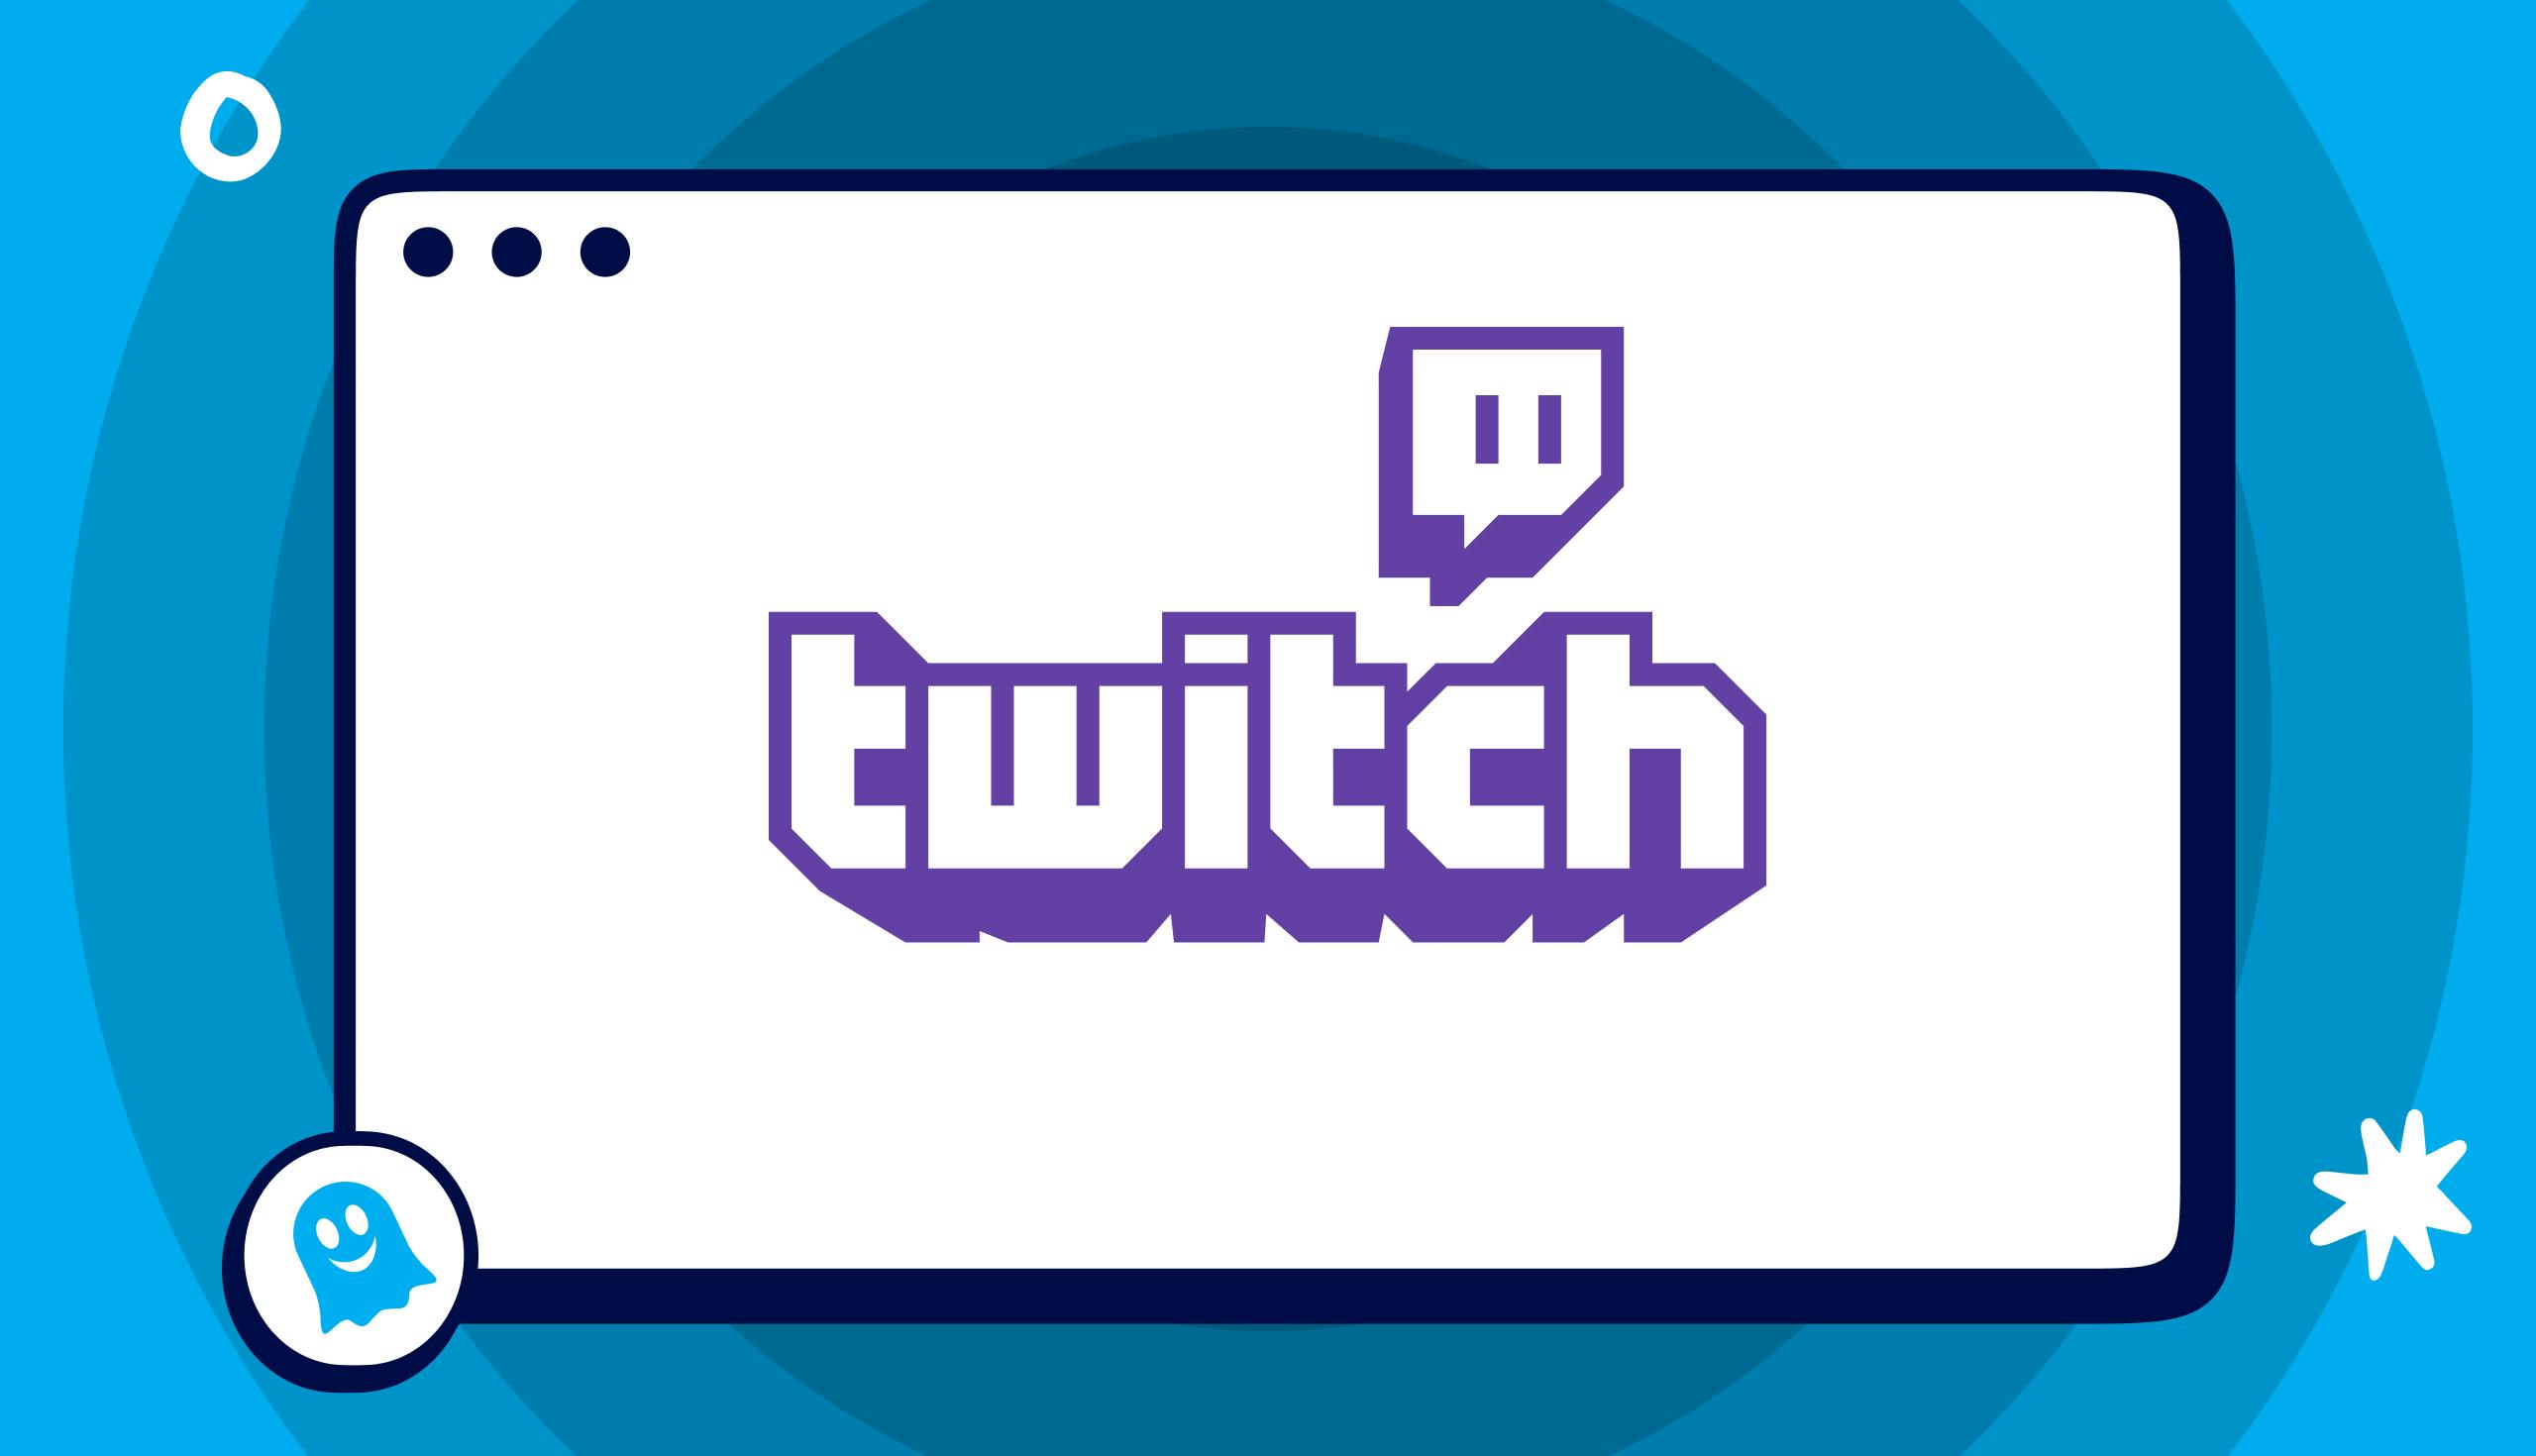 sketchy illustration showing twitch logo